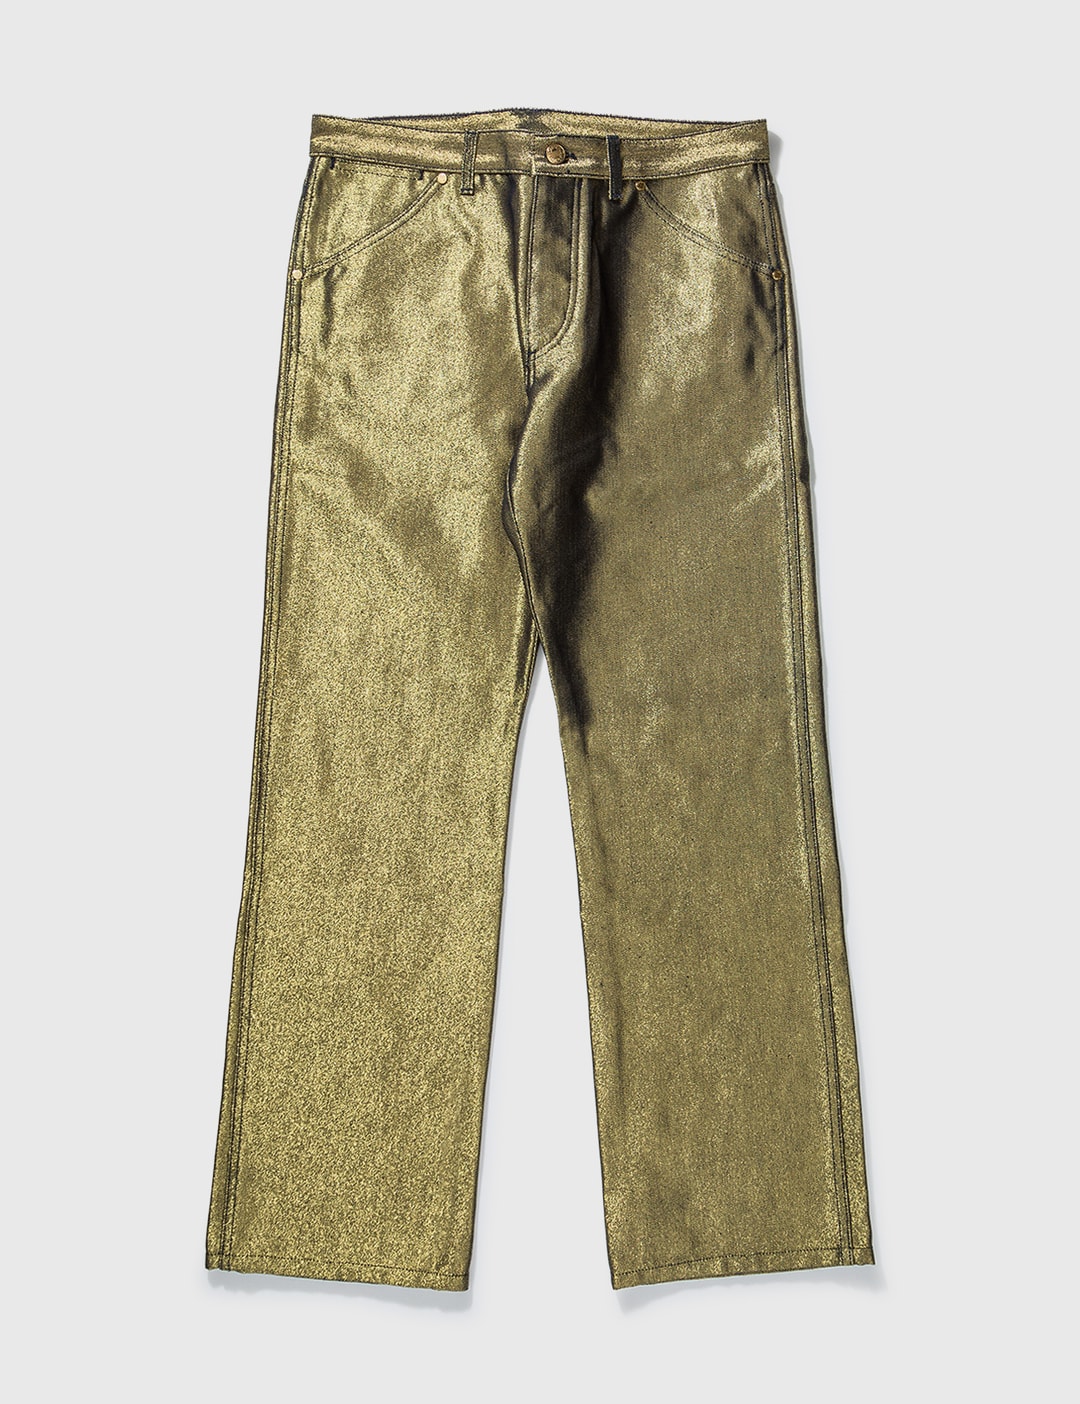 Louis Vuittion Gold Pant Placeholder Image